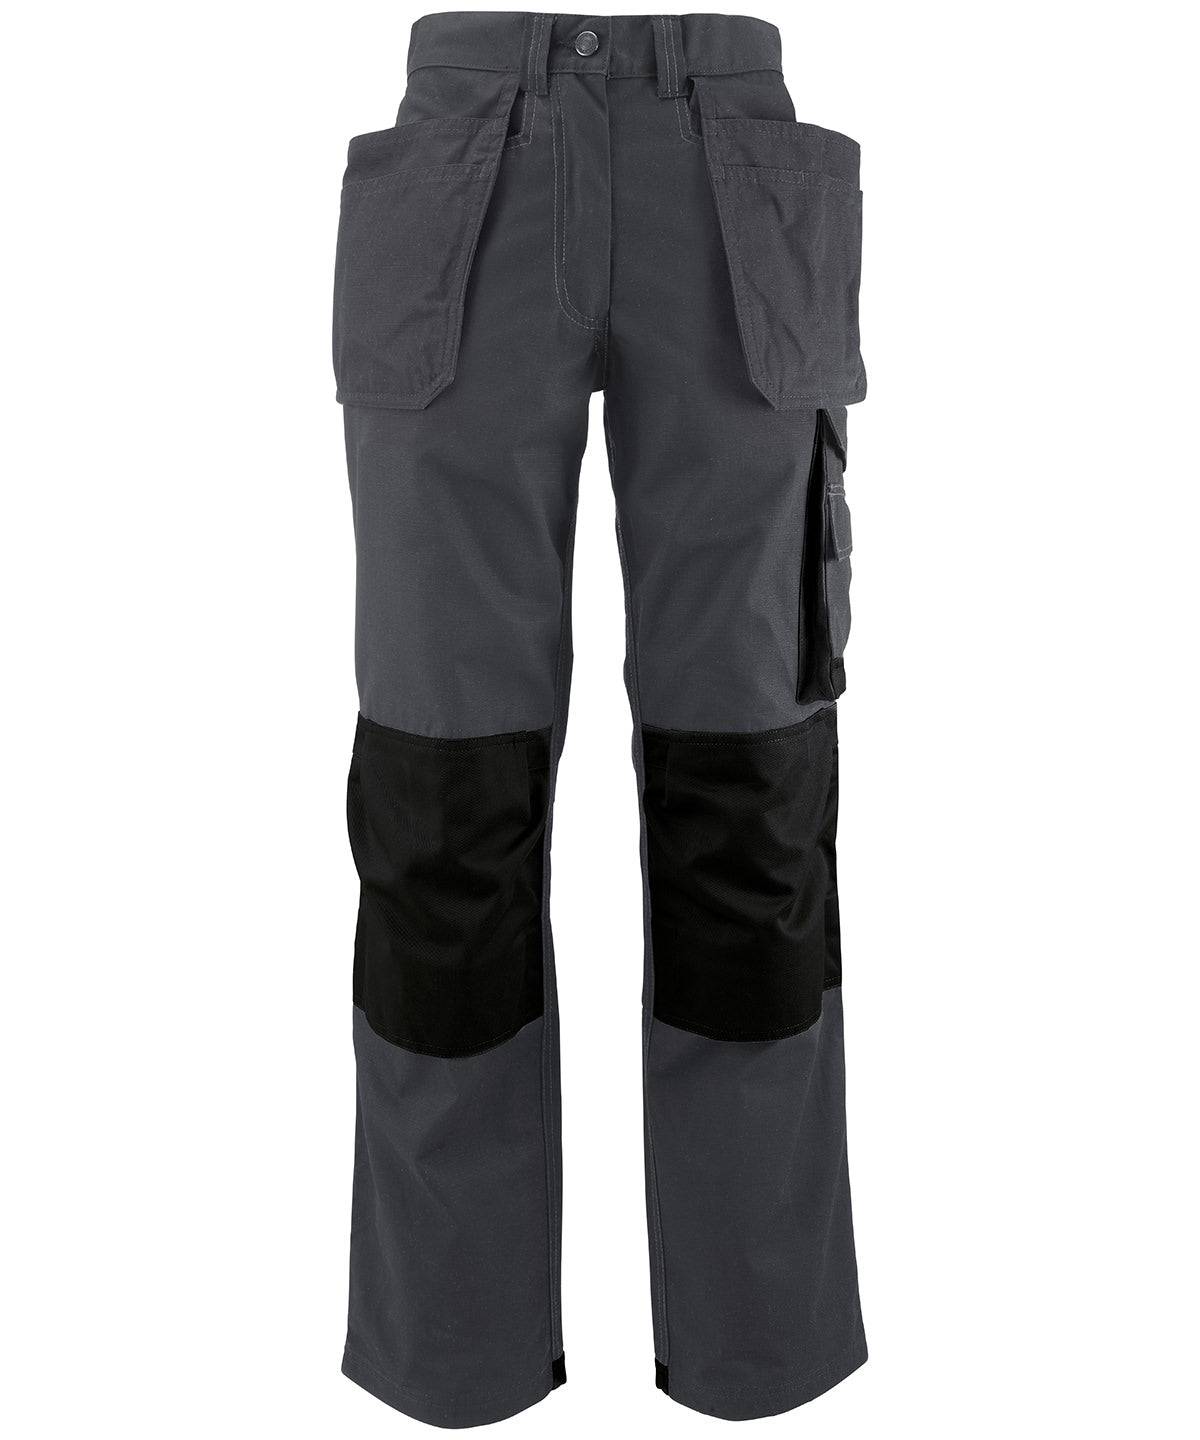 Grey/Black - Women's tungsten holster trousers